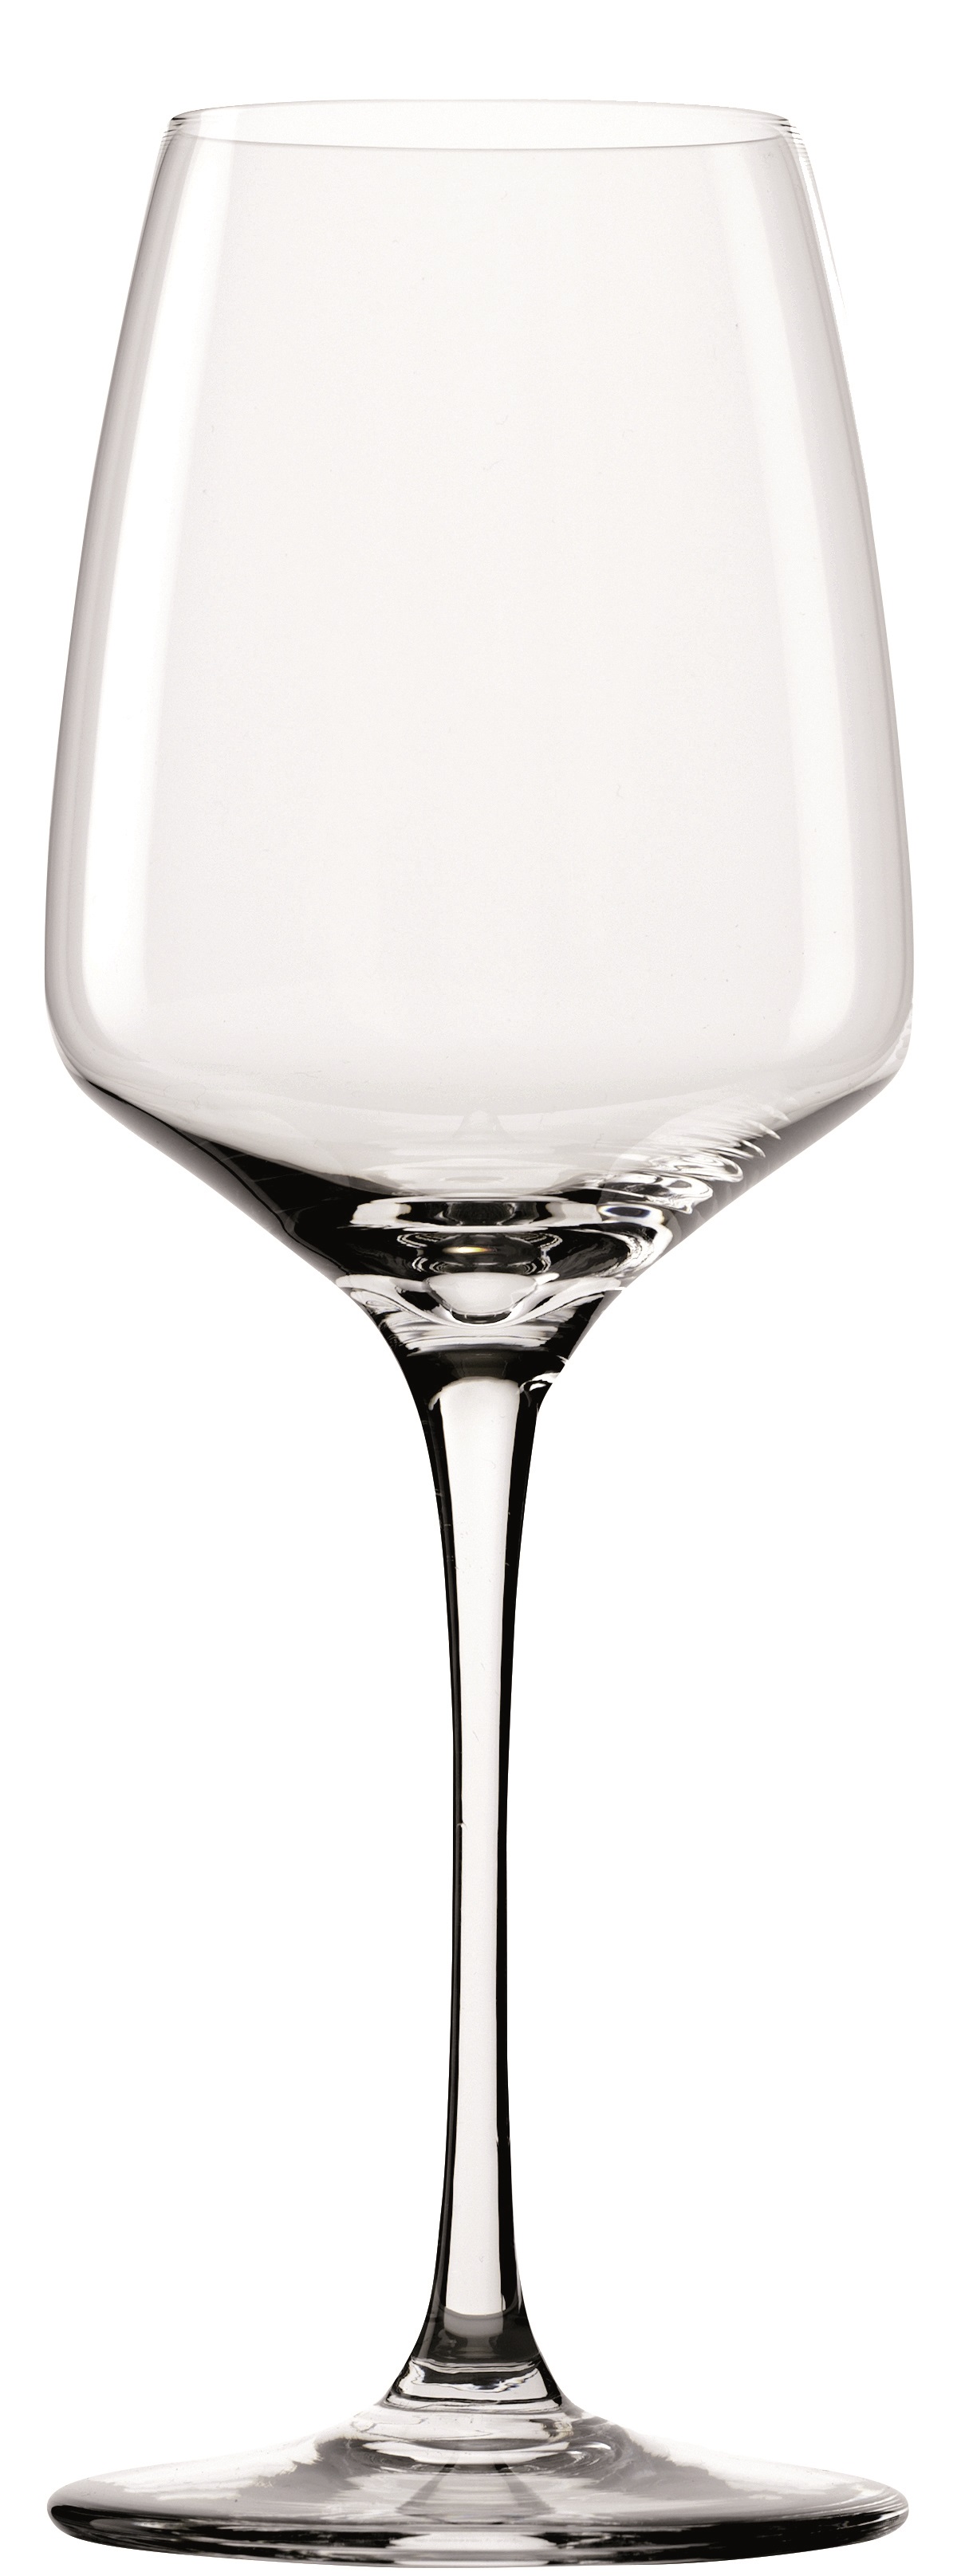 66114 Witte wijn glas experience 350ml. 1x6 st